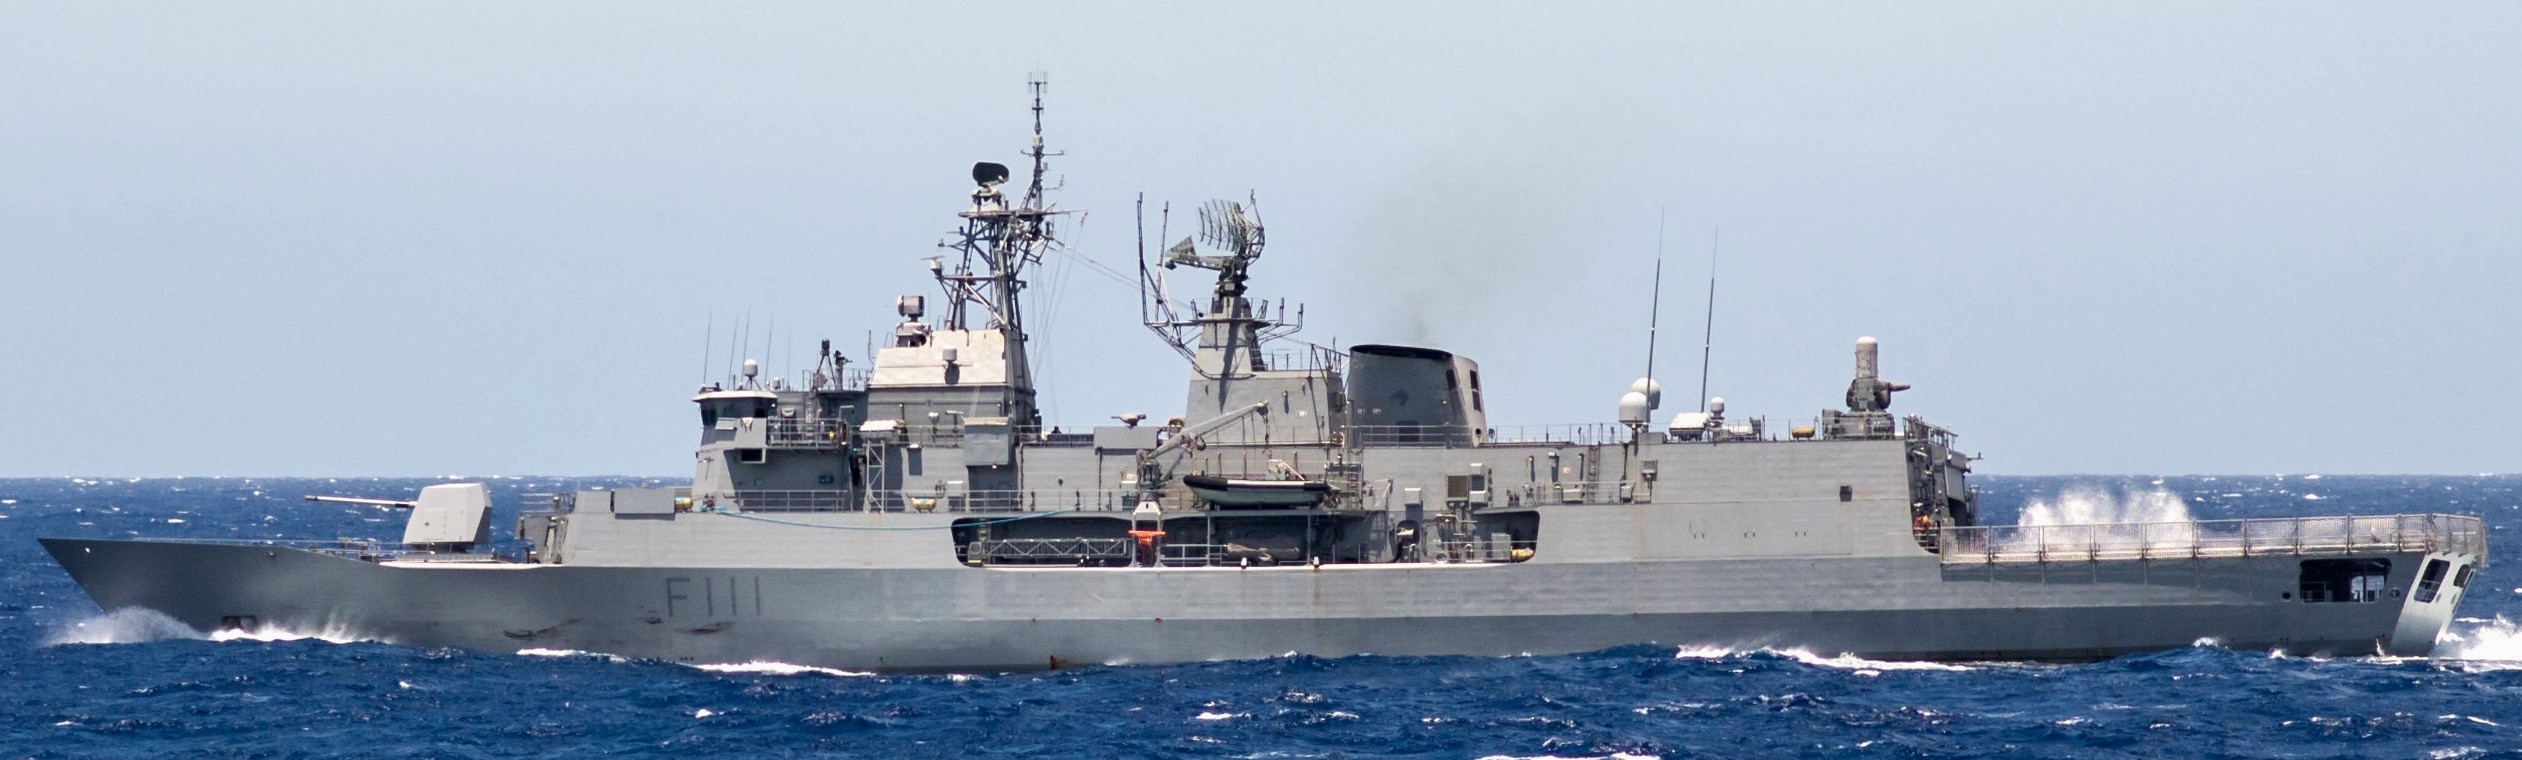 f-111 hmnzs te mana anzac class frigate royal new zealand navy rnzn rimpac 2018 38